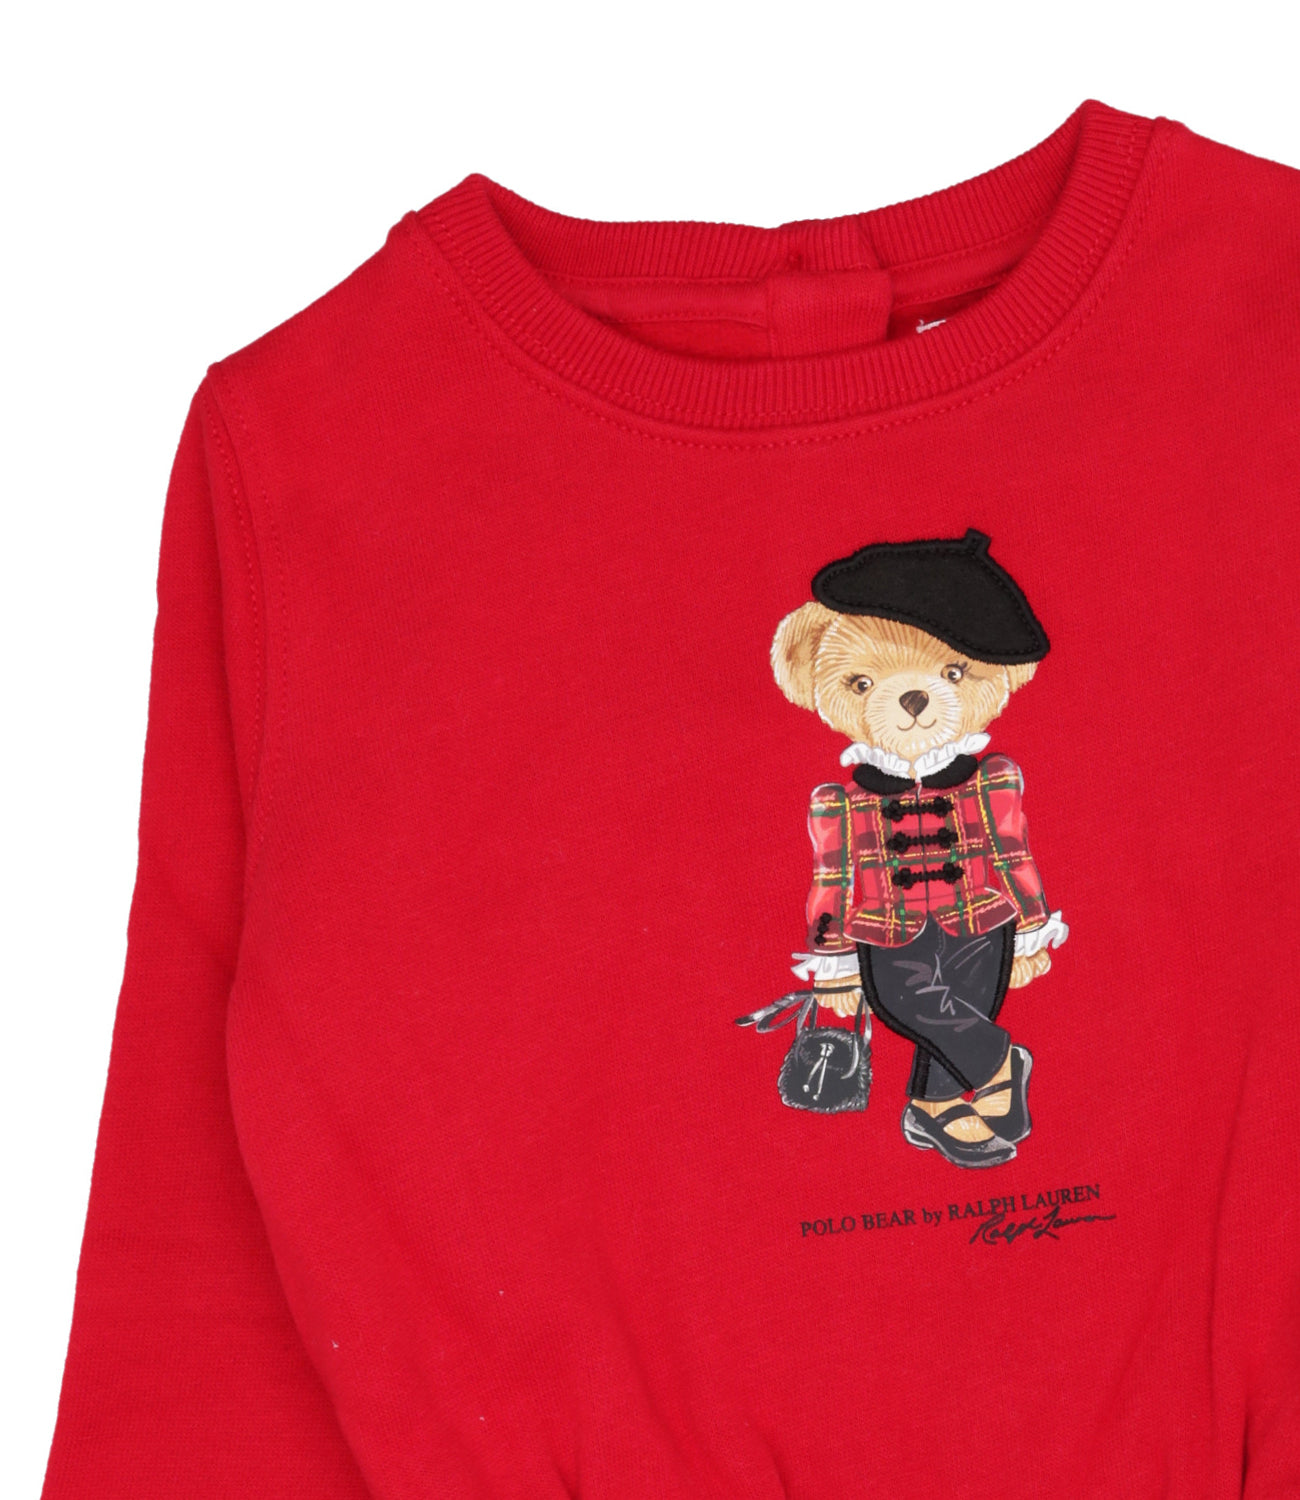 Ralph lauren Childrenswear | Red Dress